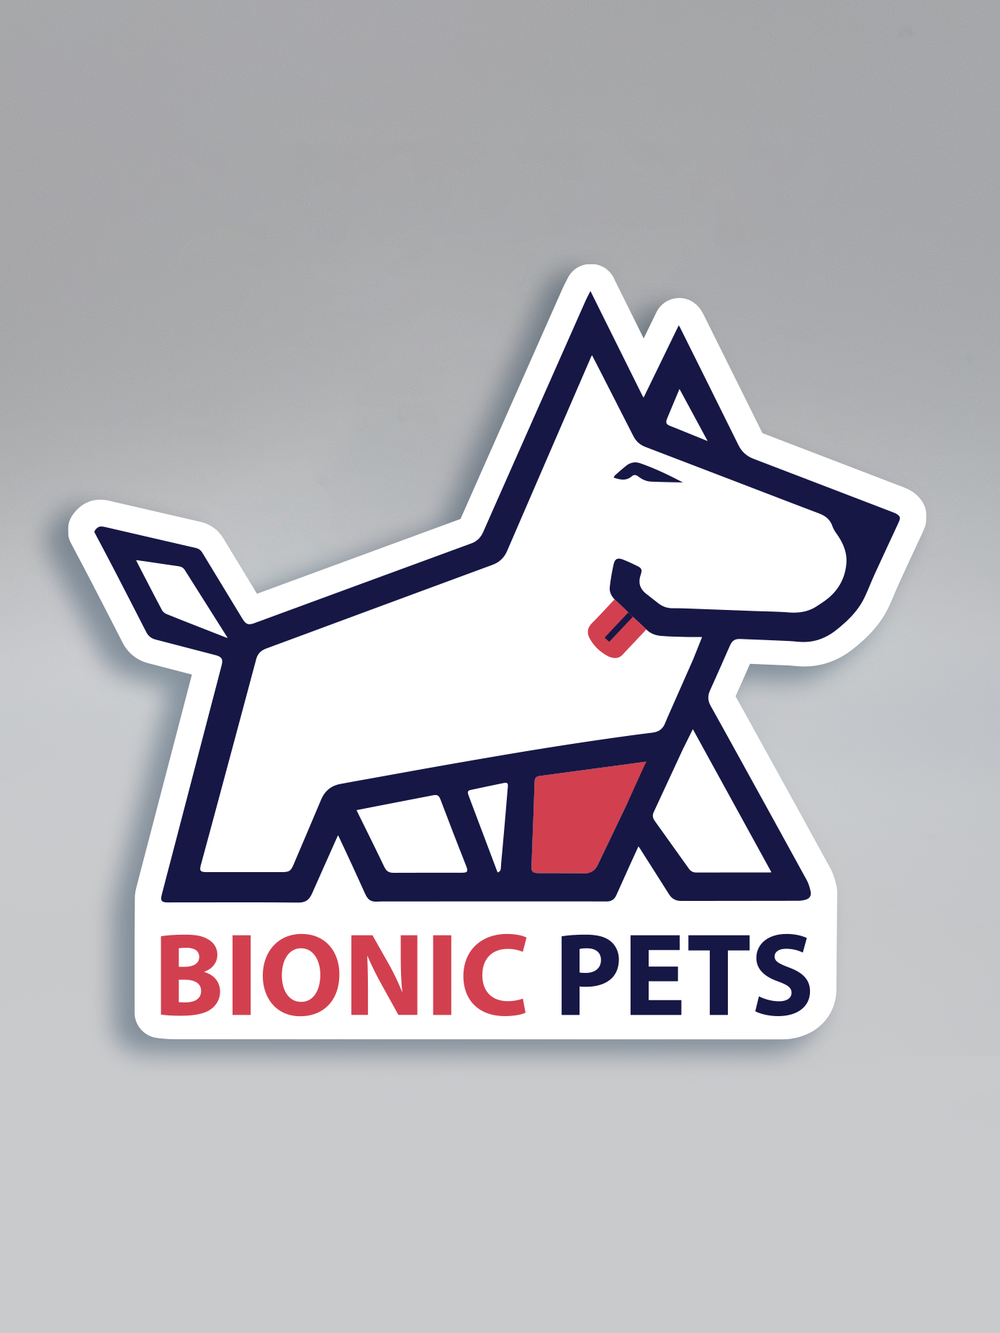 Bionic Pets Sticker